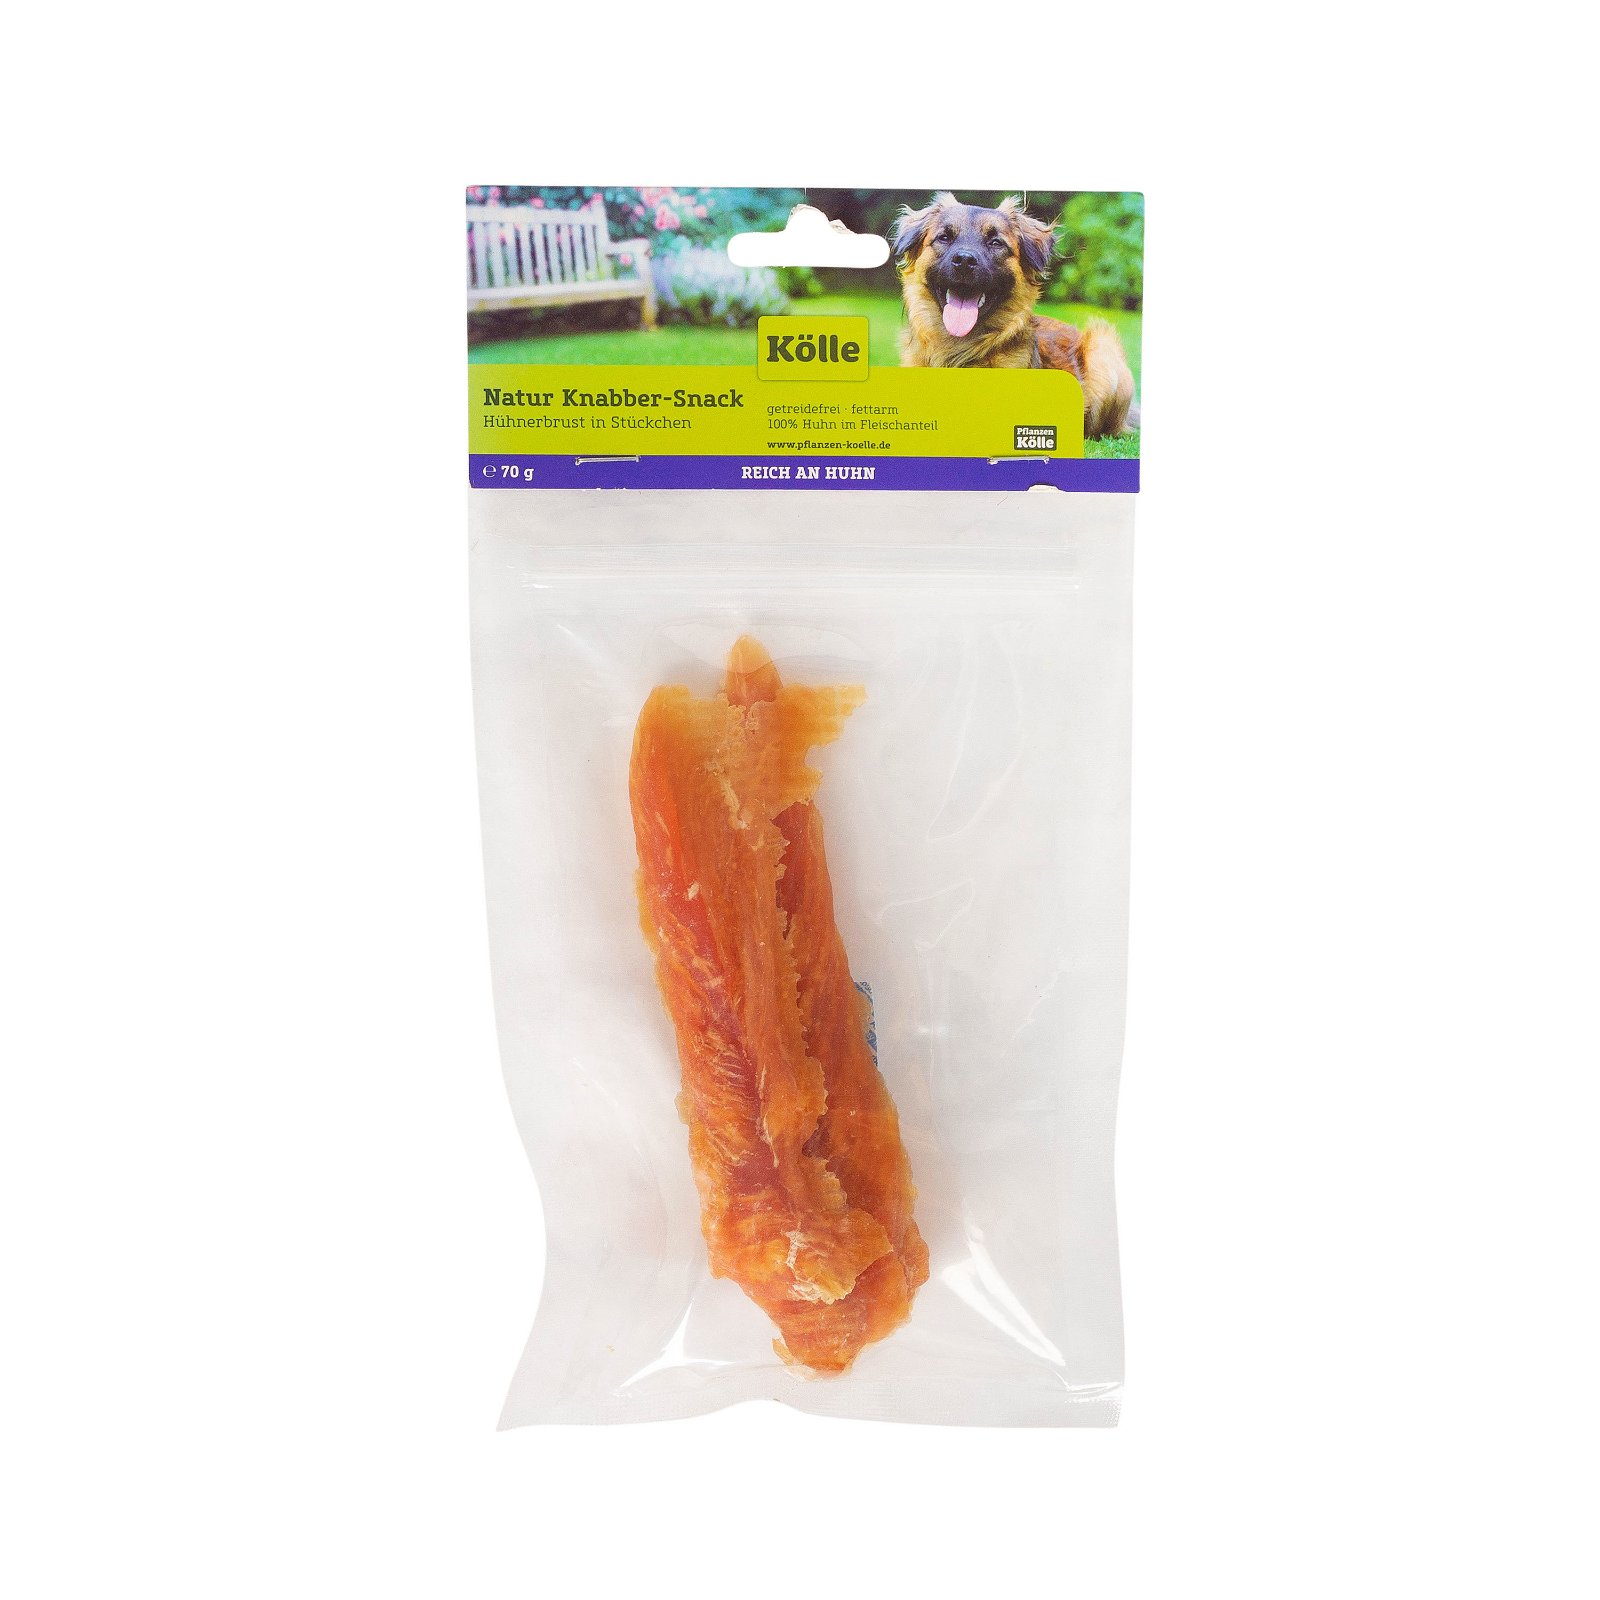 Kölle Natur Knabber-Snack für Hunde, Hühnerbrust in Stückchen, 70 g